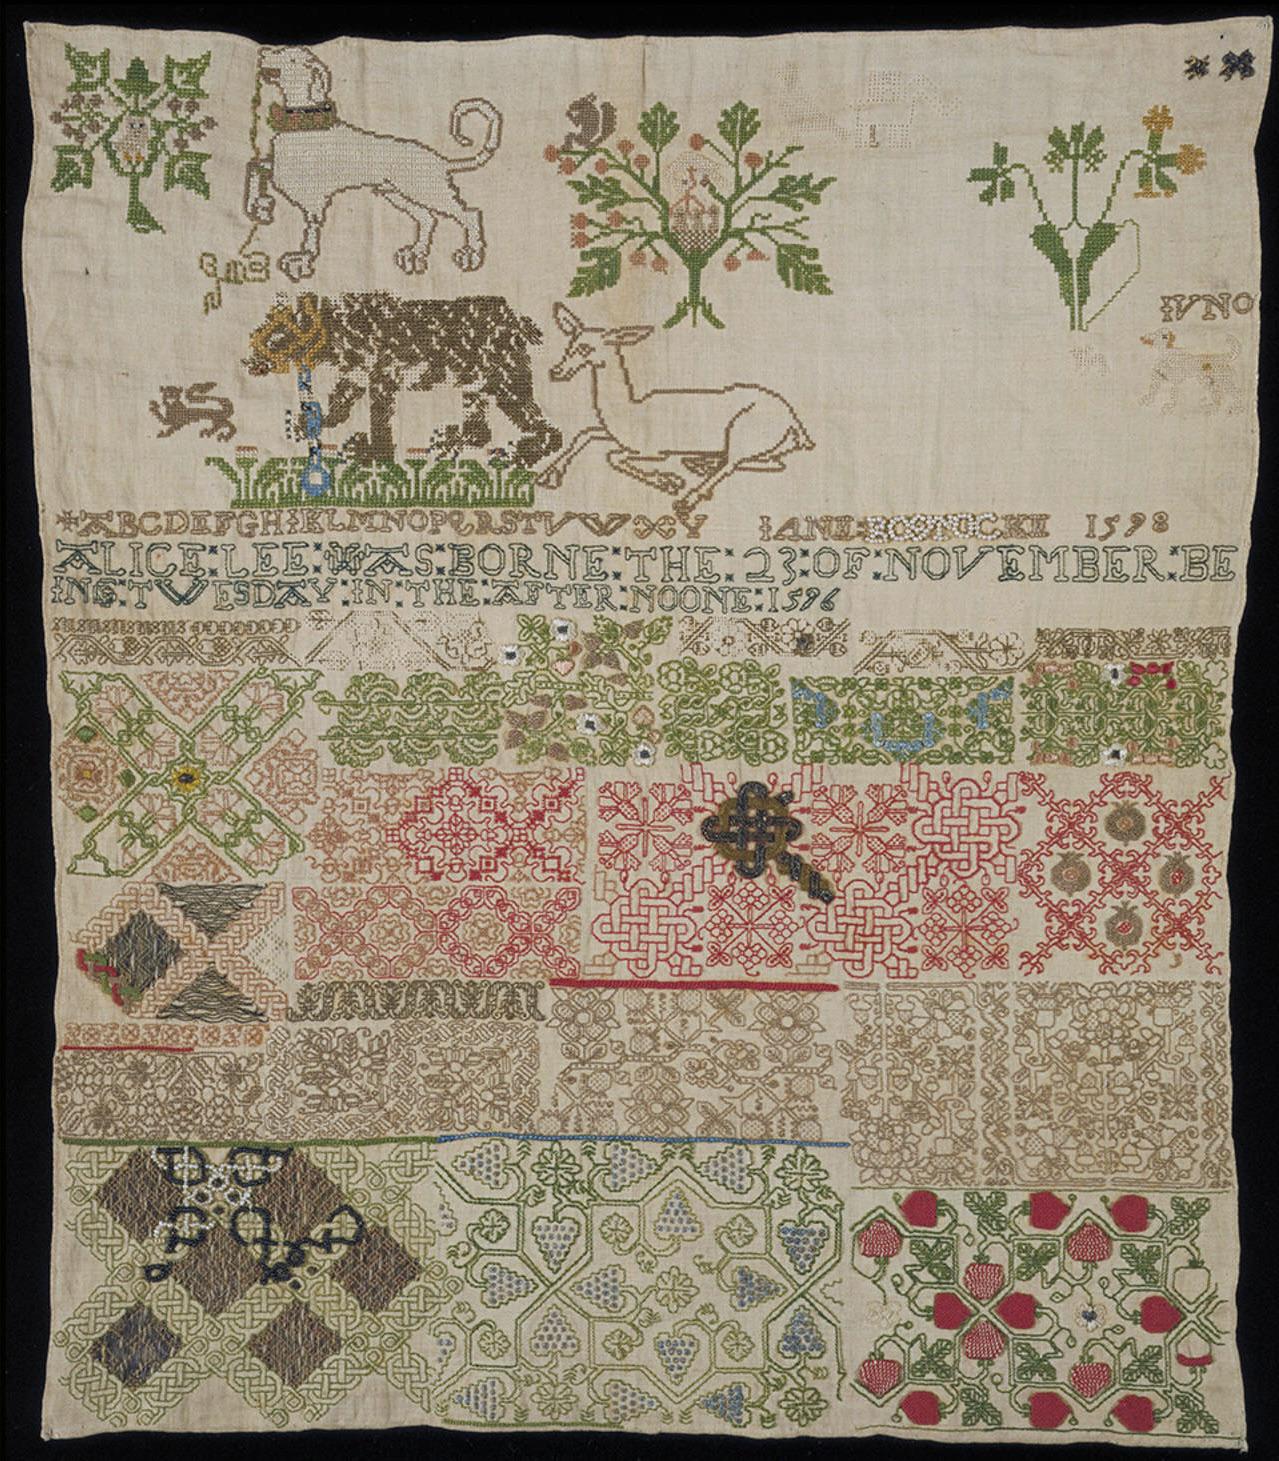 A cross-stitch embroidery sampler by Jane Bostocke of England.jpeg